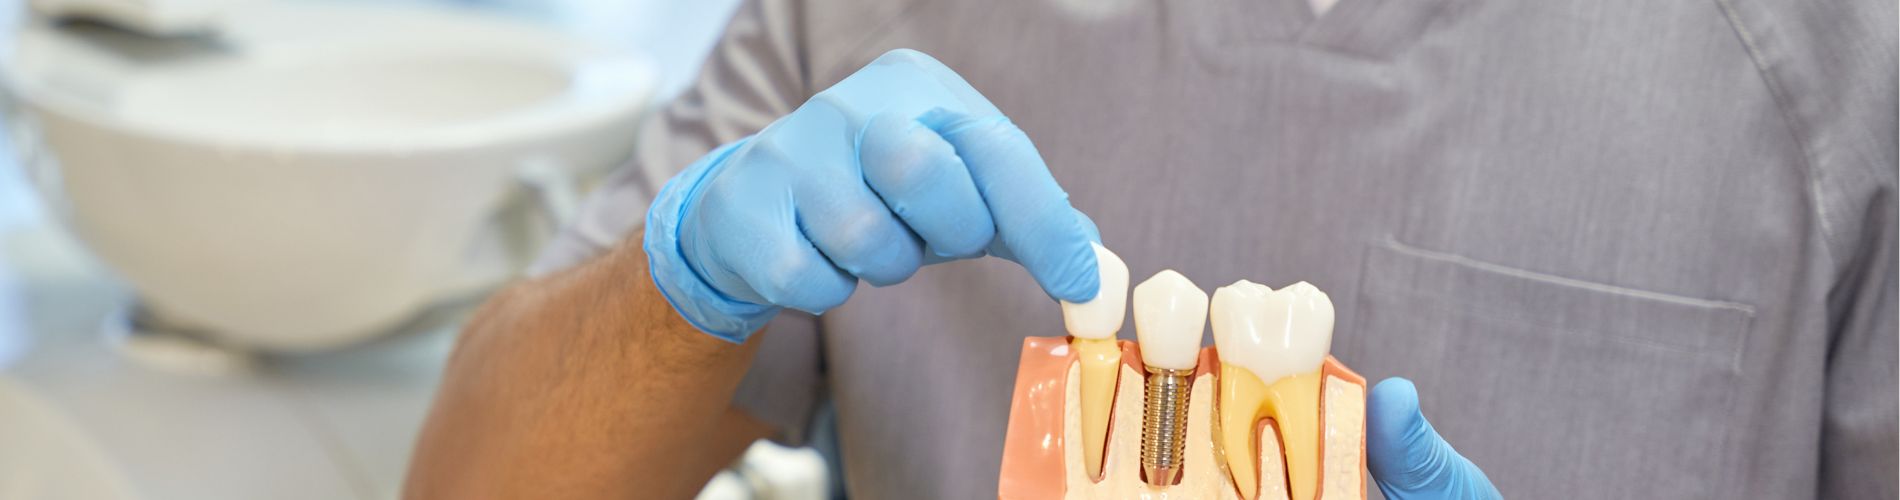 Dental Implants - Alvaro Ordonez